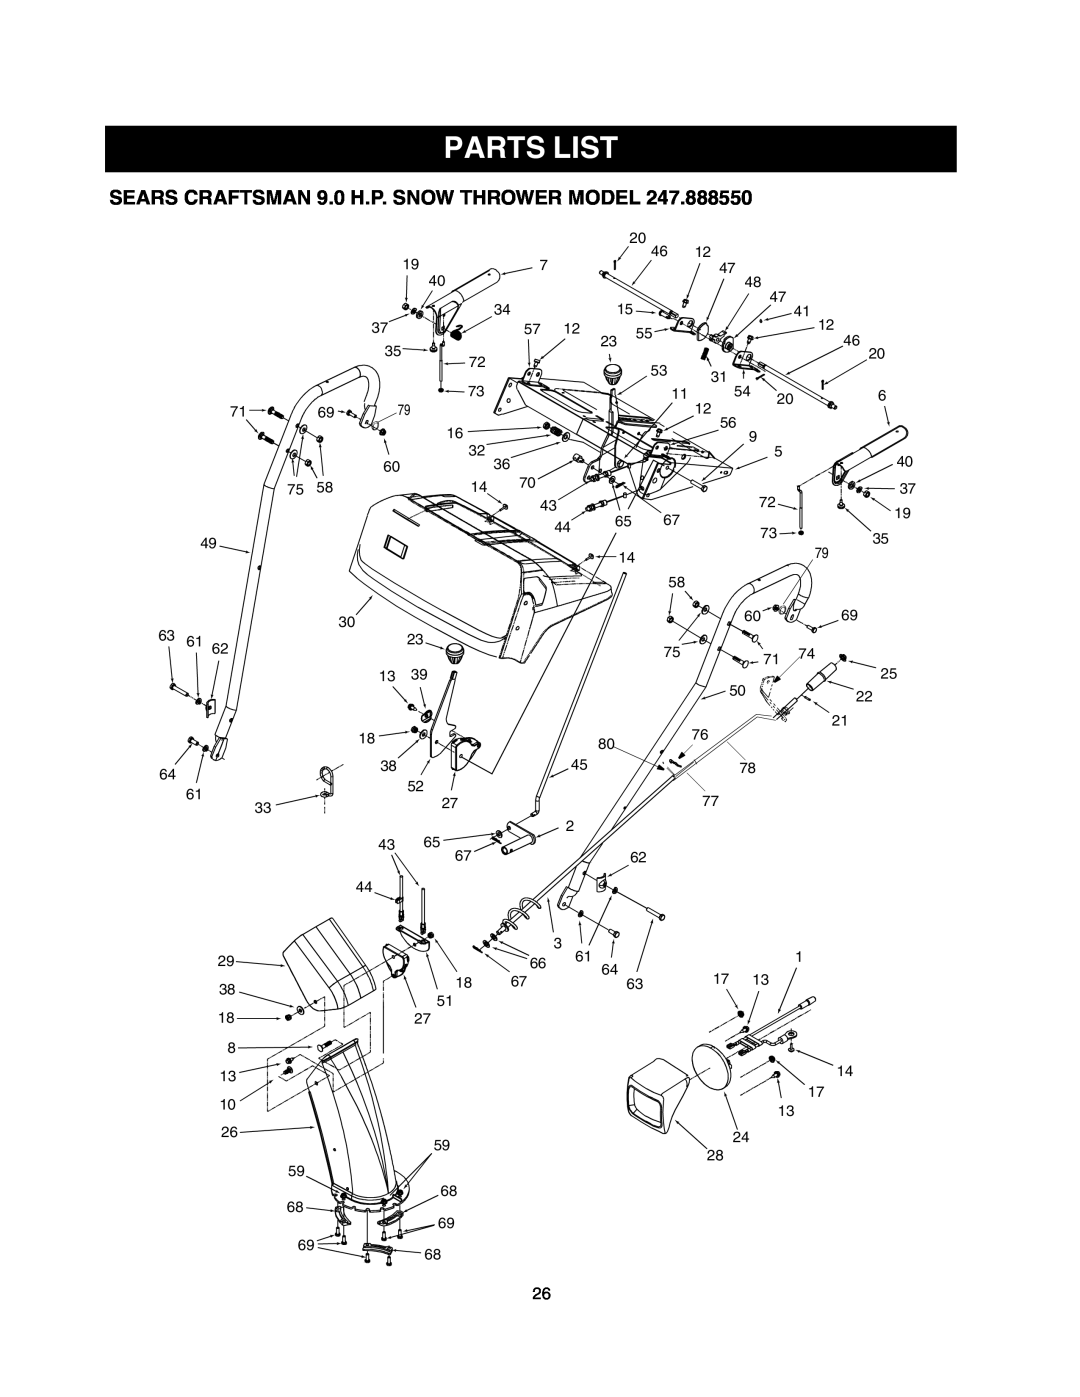 Craftsman 247.88855 owner manual Parts List, SEARS CRAFTSMAN 9.0 H.P. SNOW THROWER MODEL, 8 13 10 